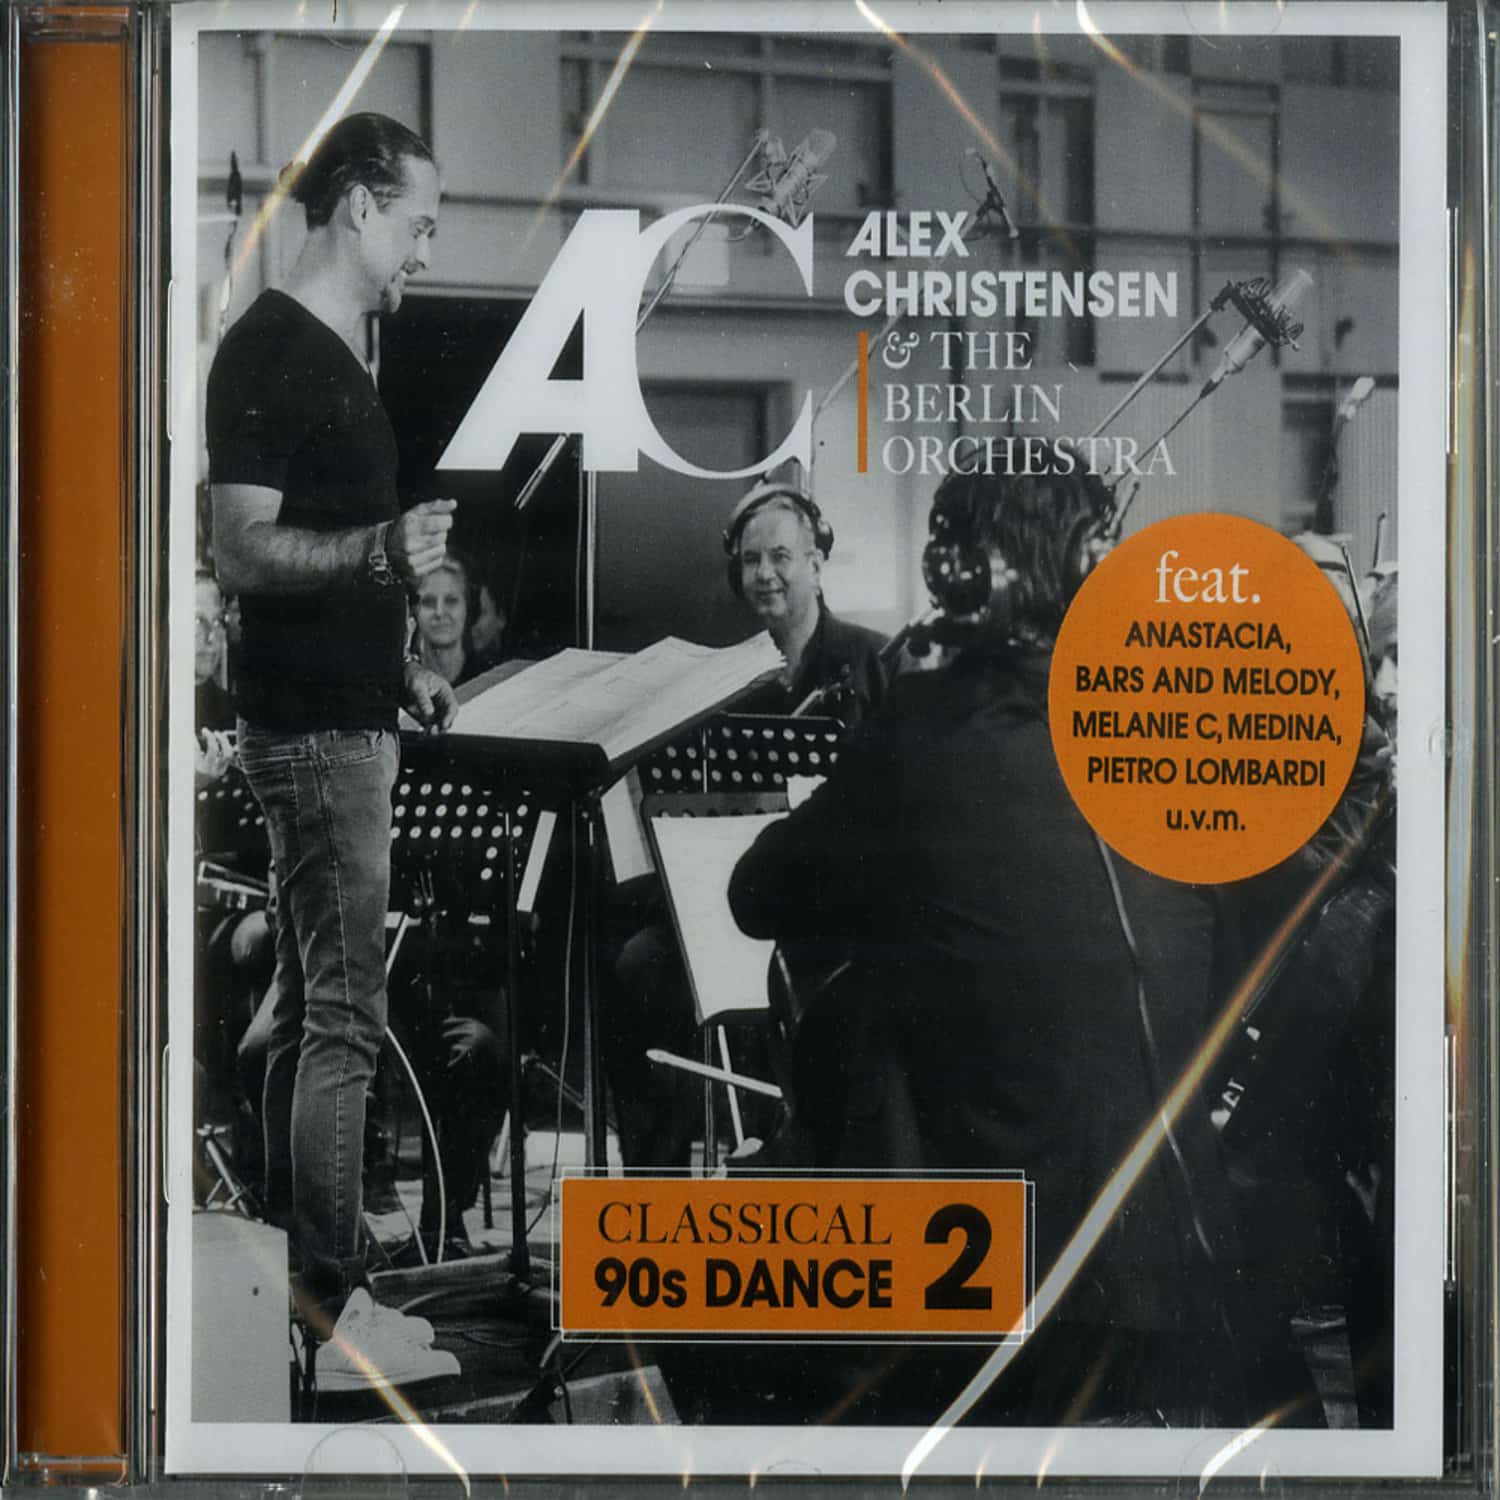 Alex Christensen & The Berlin Orchestra - CLASSICAL 90S DANCE 2 